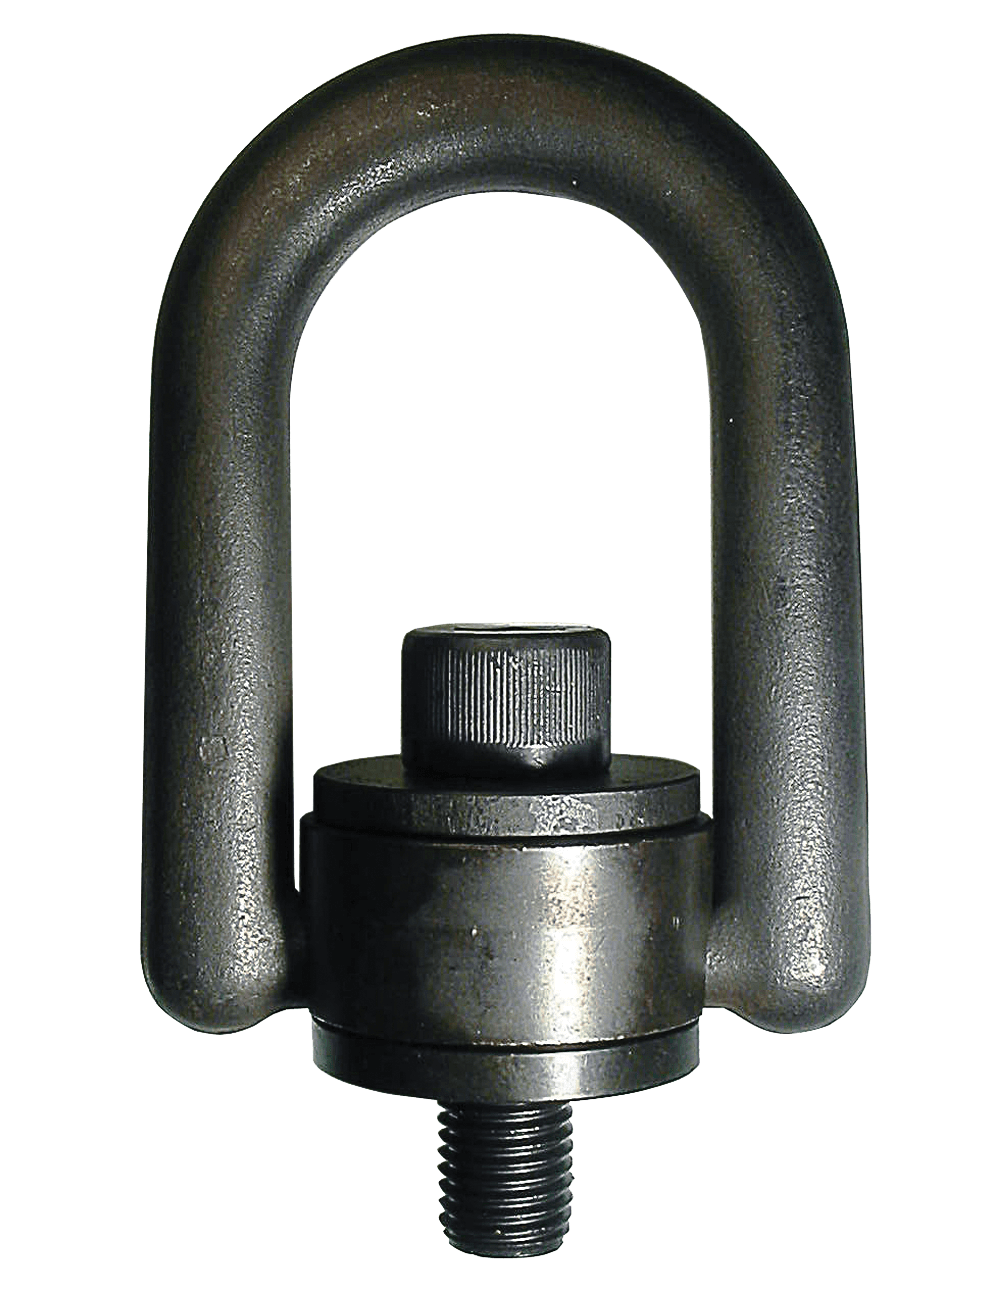 ADB Hoist Rings 33716 Heavy Duty Hoist Ring WLL 3/4-10 Thread 5000 lb 1.5 TP 